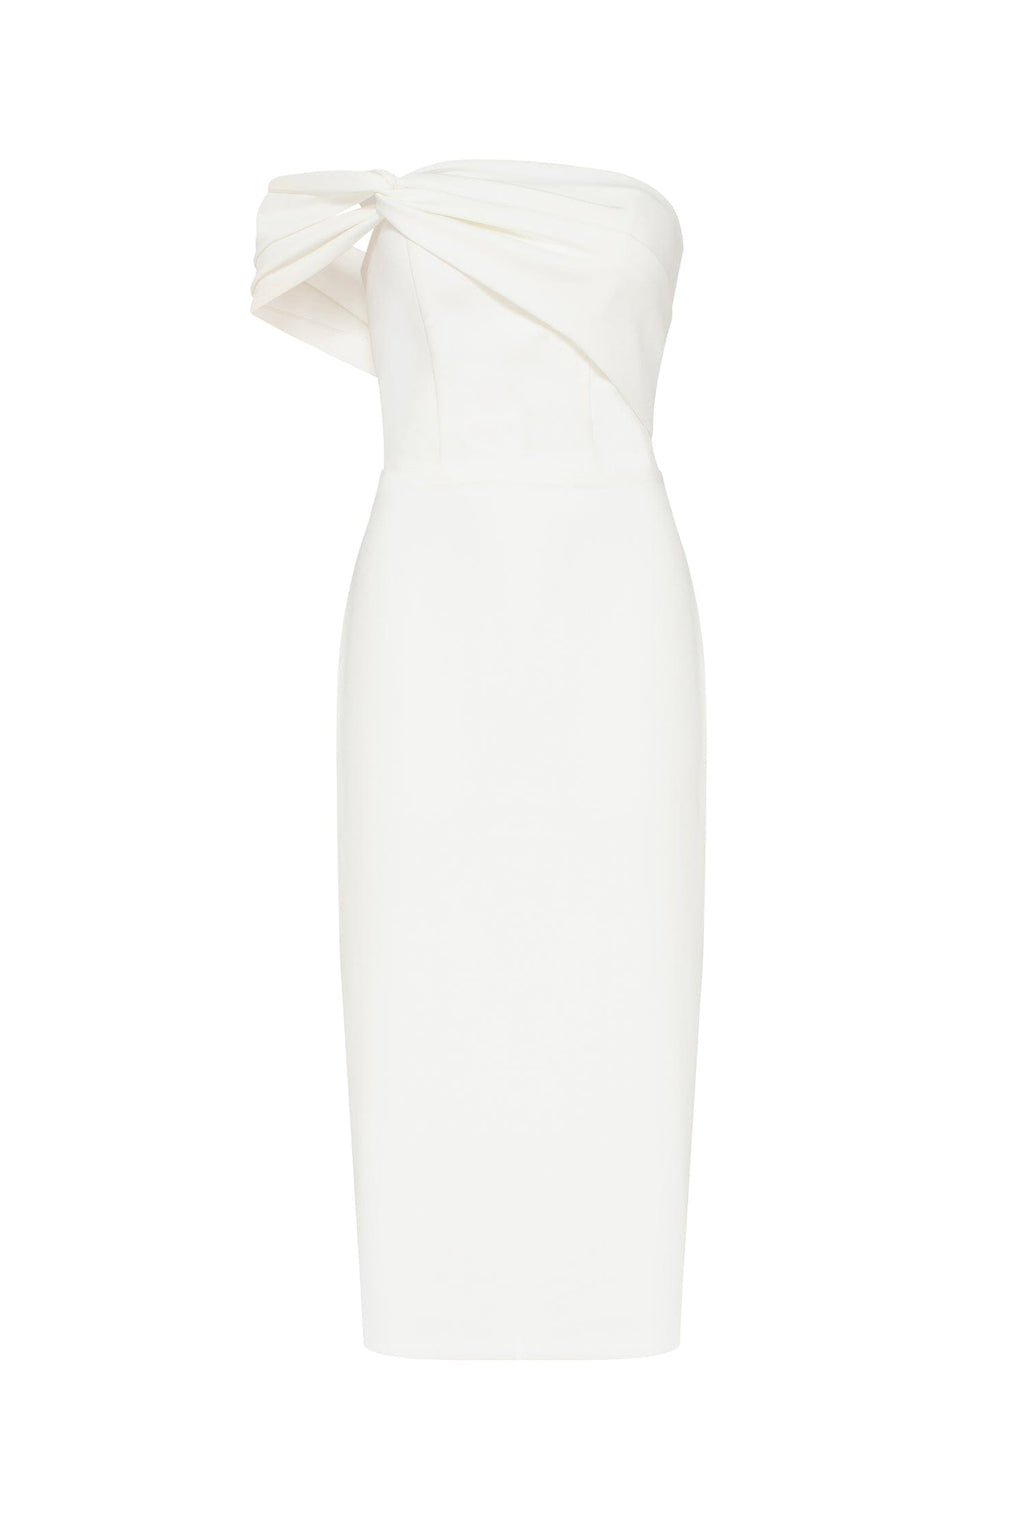 Bimba Y Lola Silk Maxi Dress (14) NOW £120 - The White Dress Agency